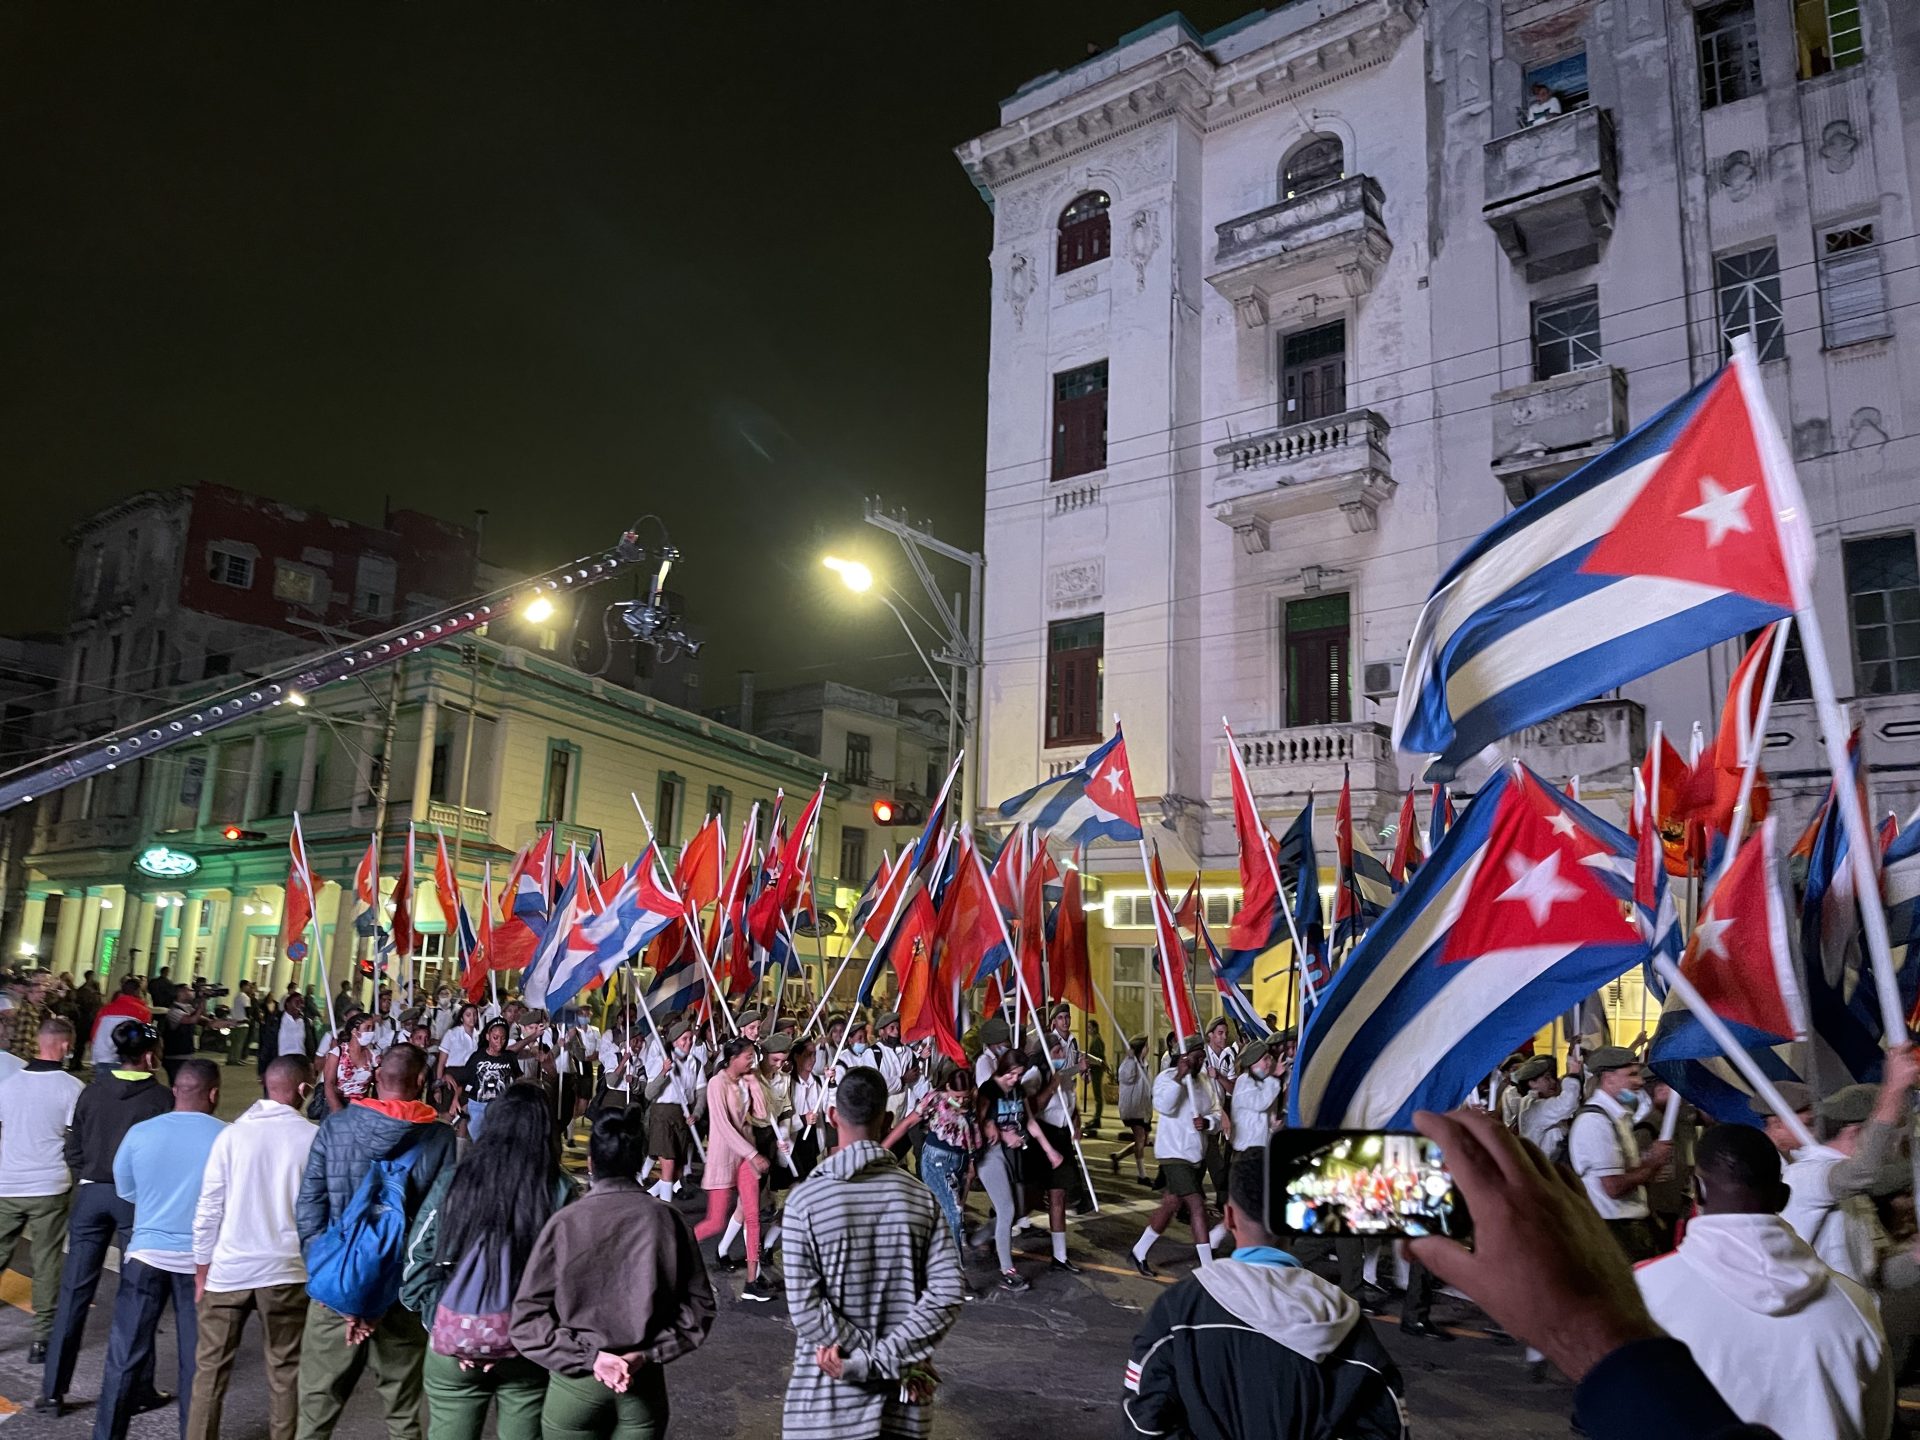 Cubans celebrating the 169th anniversary of José Martí's birth